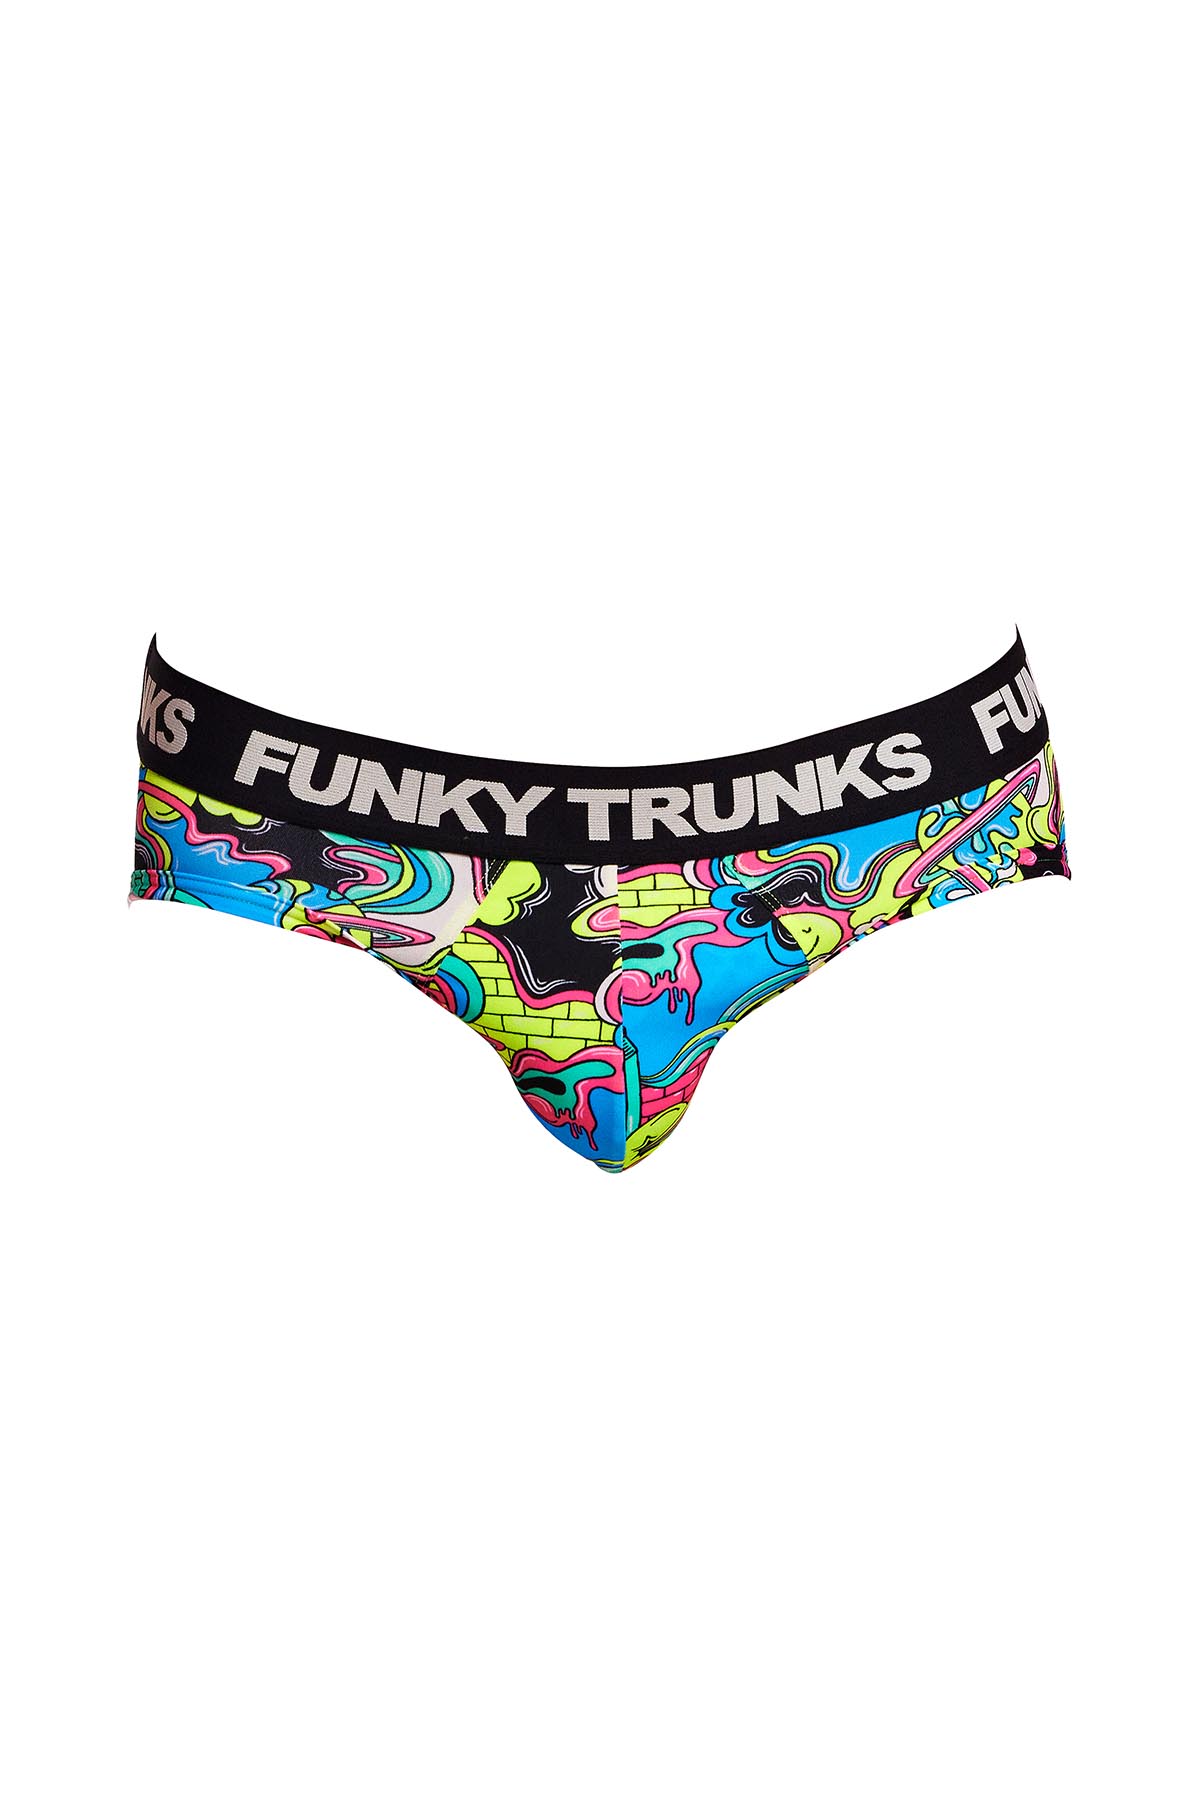 Funky Trunks Underwear Cotton Trunks Stud Muffin